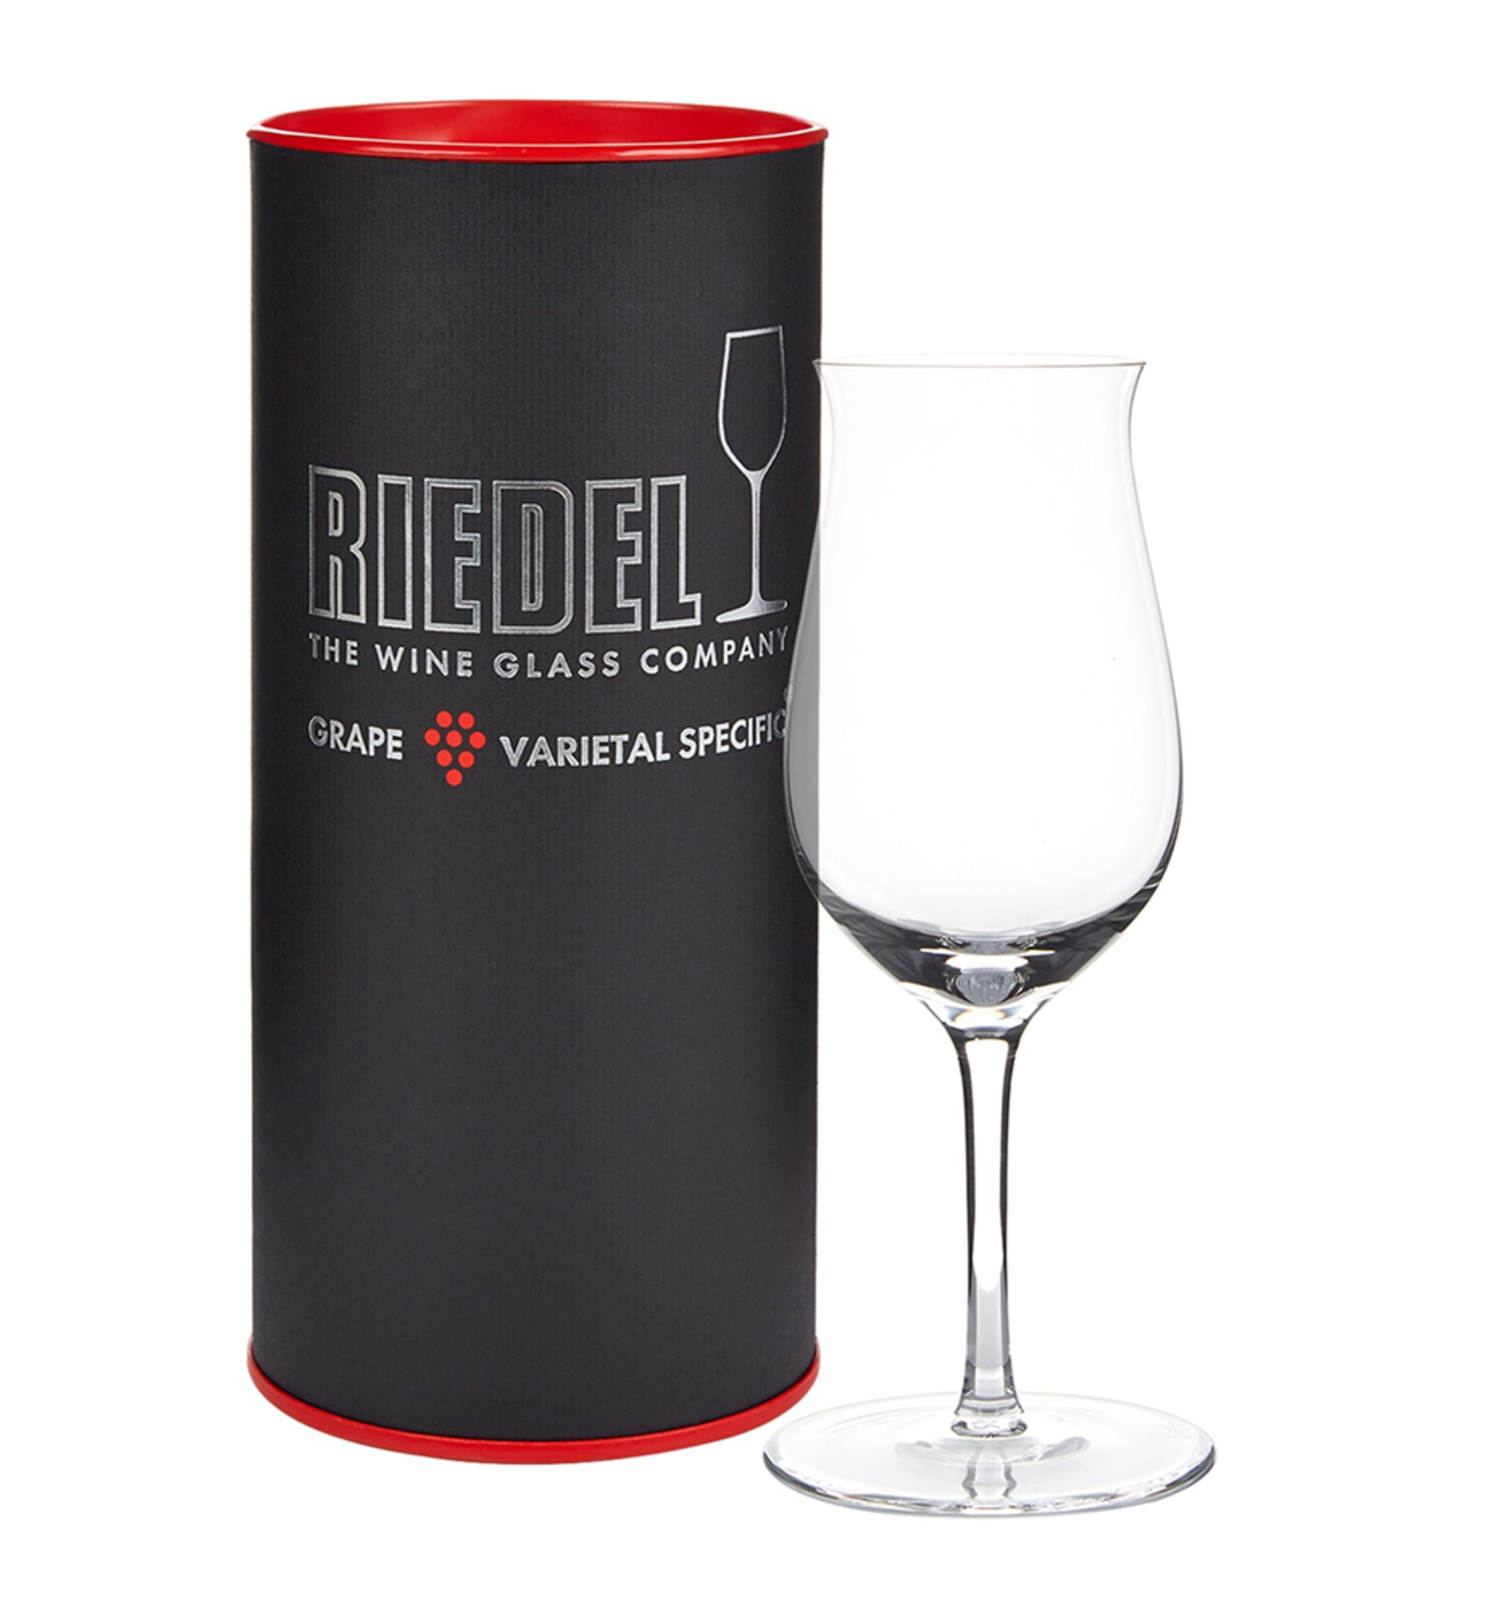 RIEDEL - The Wine Glass Company